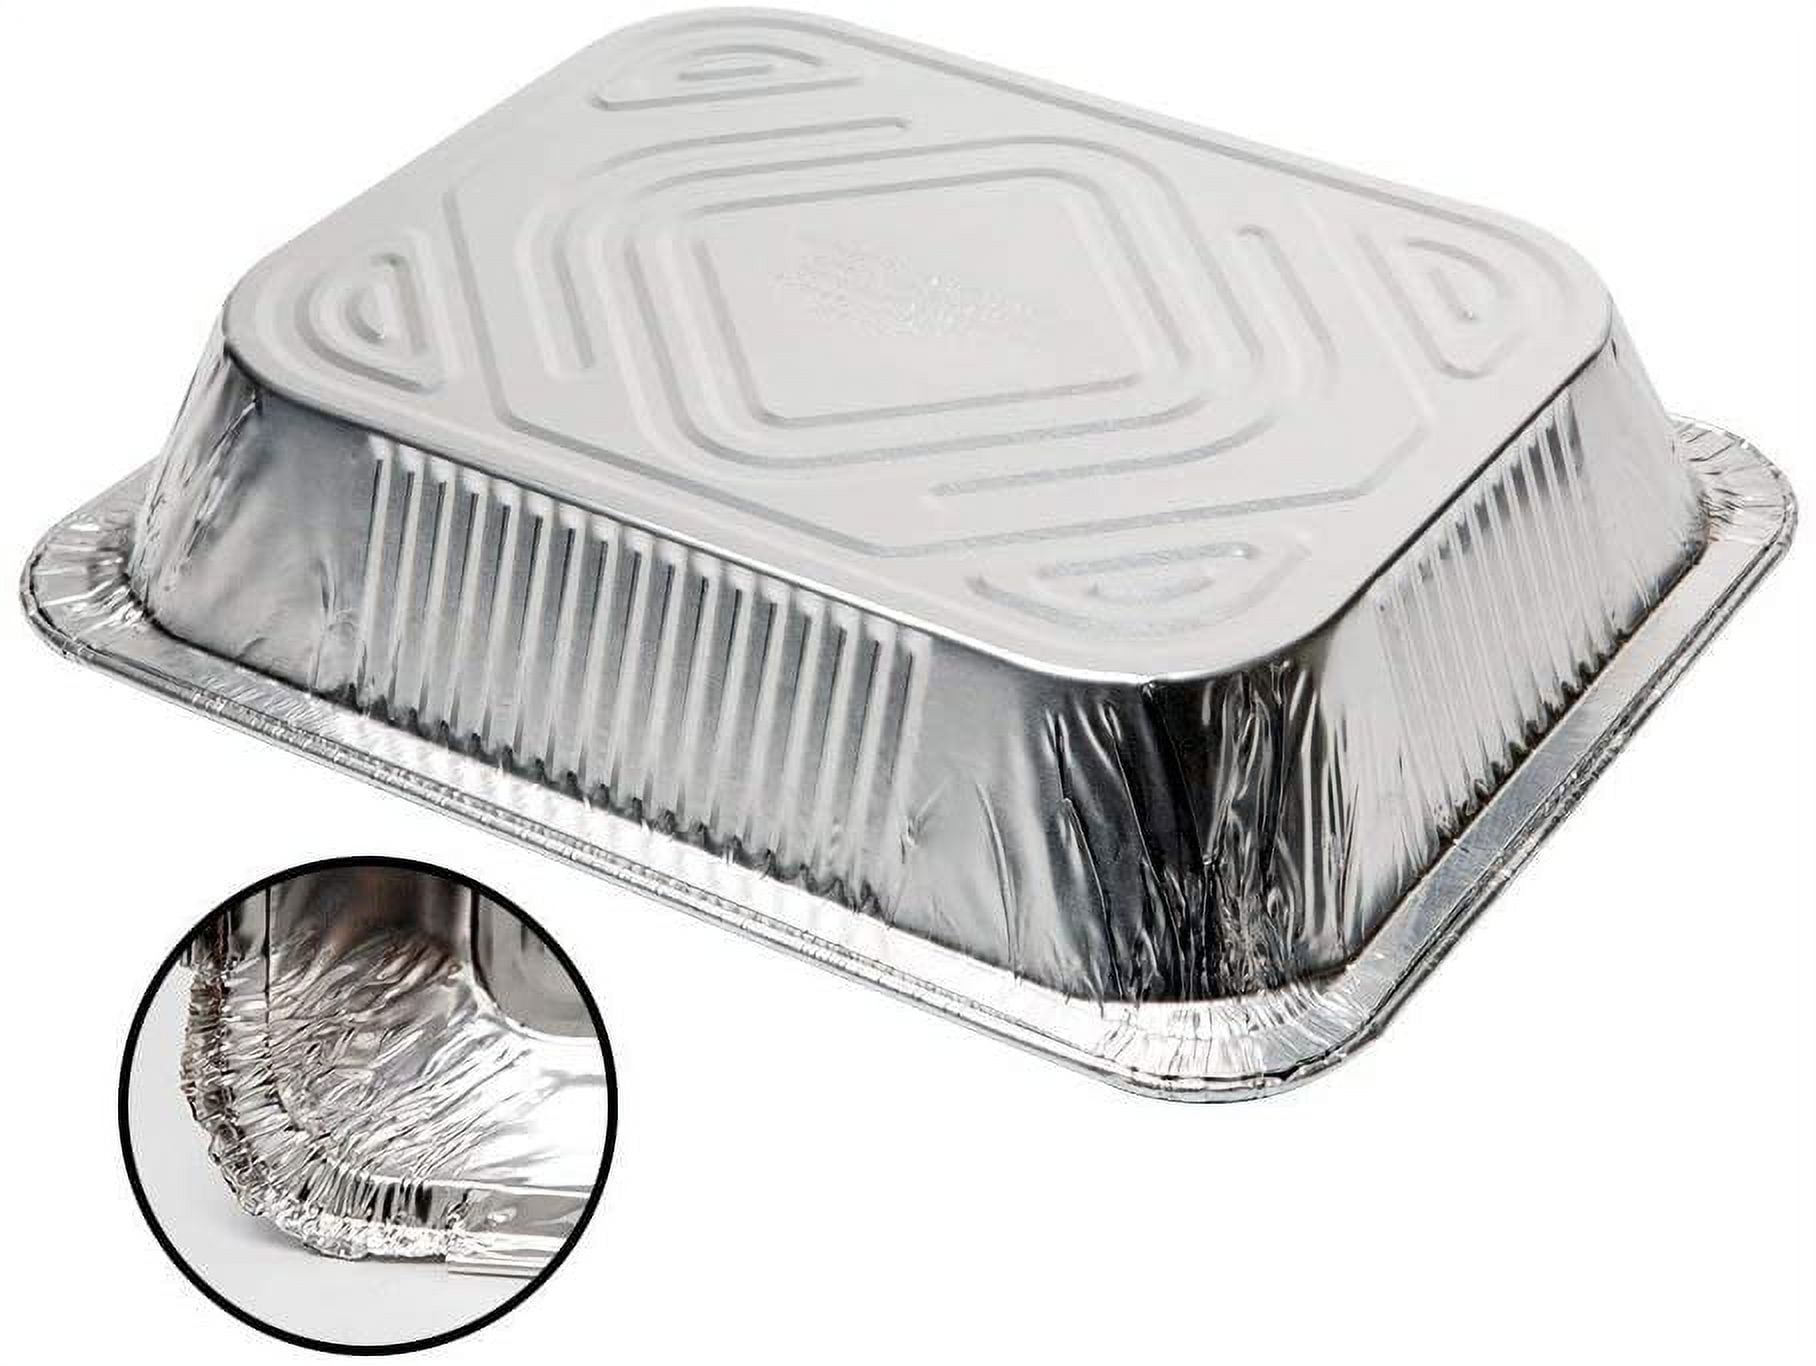 VeZee Full Size Disposable Aluminum Pans Cookie Sheet Baking Pans| Nonstick  Durable Resuable Aluminum Foil Tray with Dome Lids.|5CT